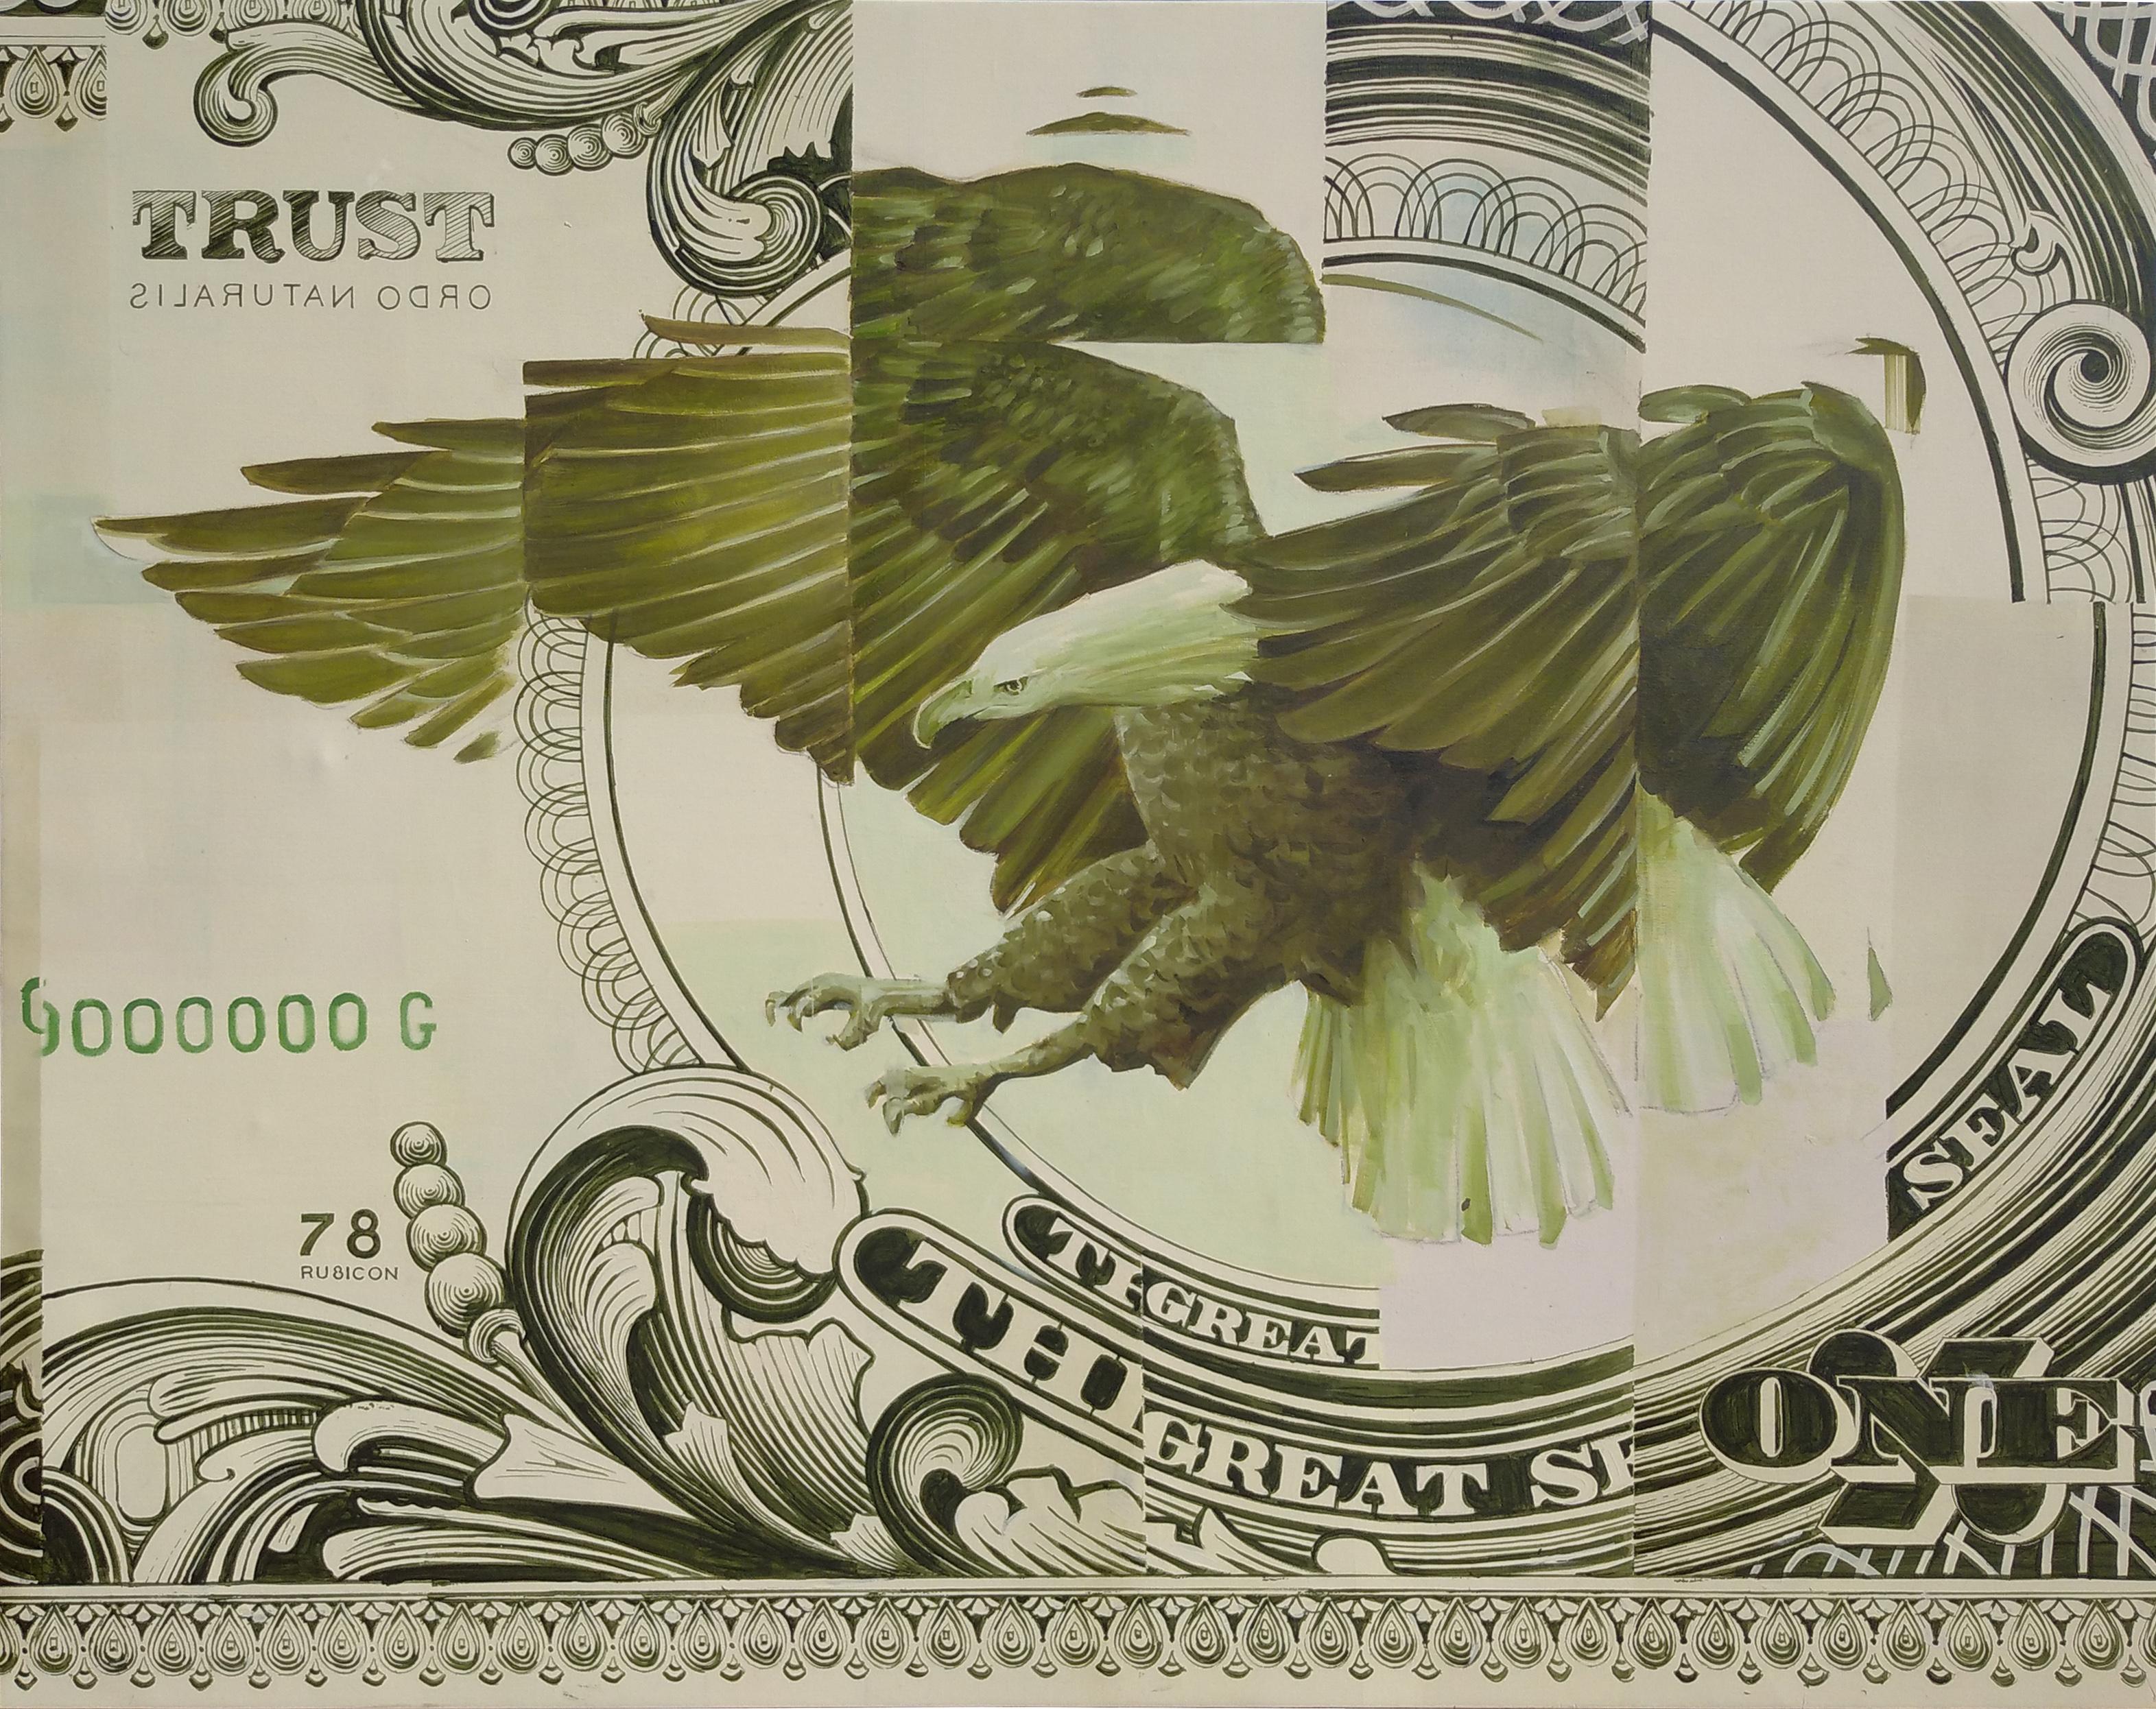 Ordus Naturalis, Öl und Acryl auf Leinwand Gemälde, Adler und US-Dollar, Währung